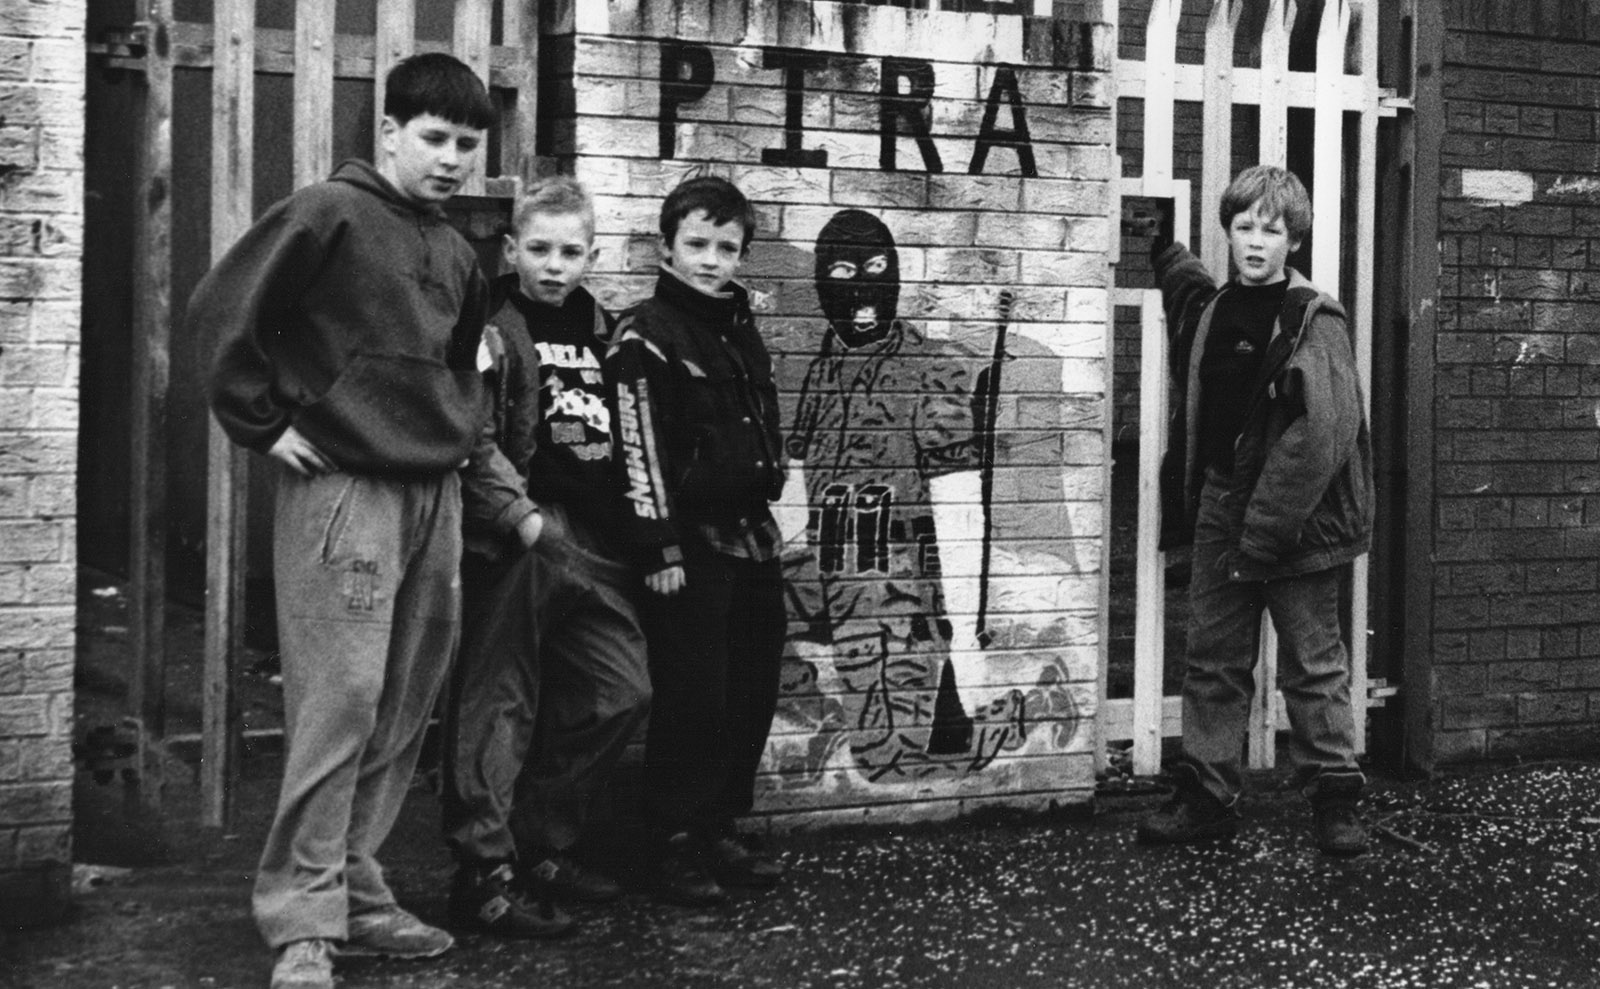 neighborhood kids posing with mural honoring members of provisional irish republican army in west belfast, northern ireland